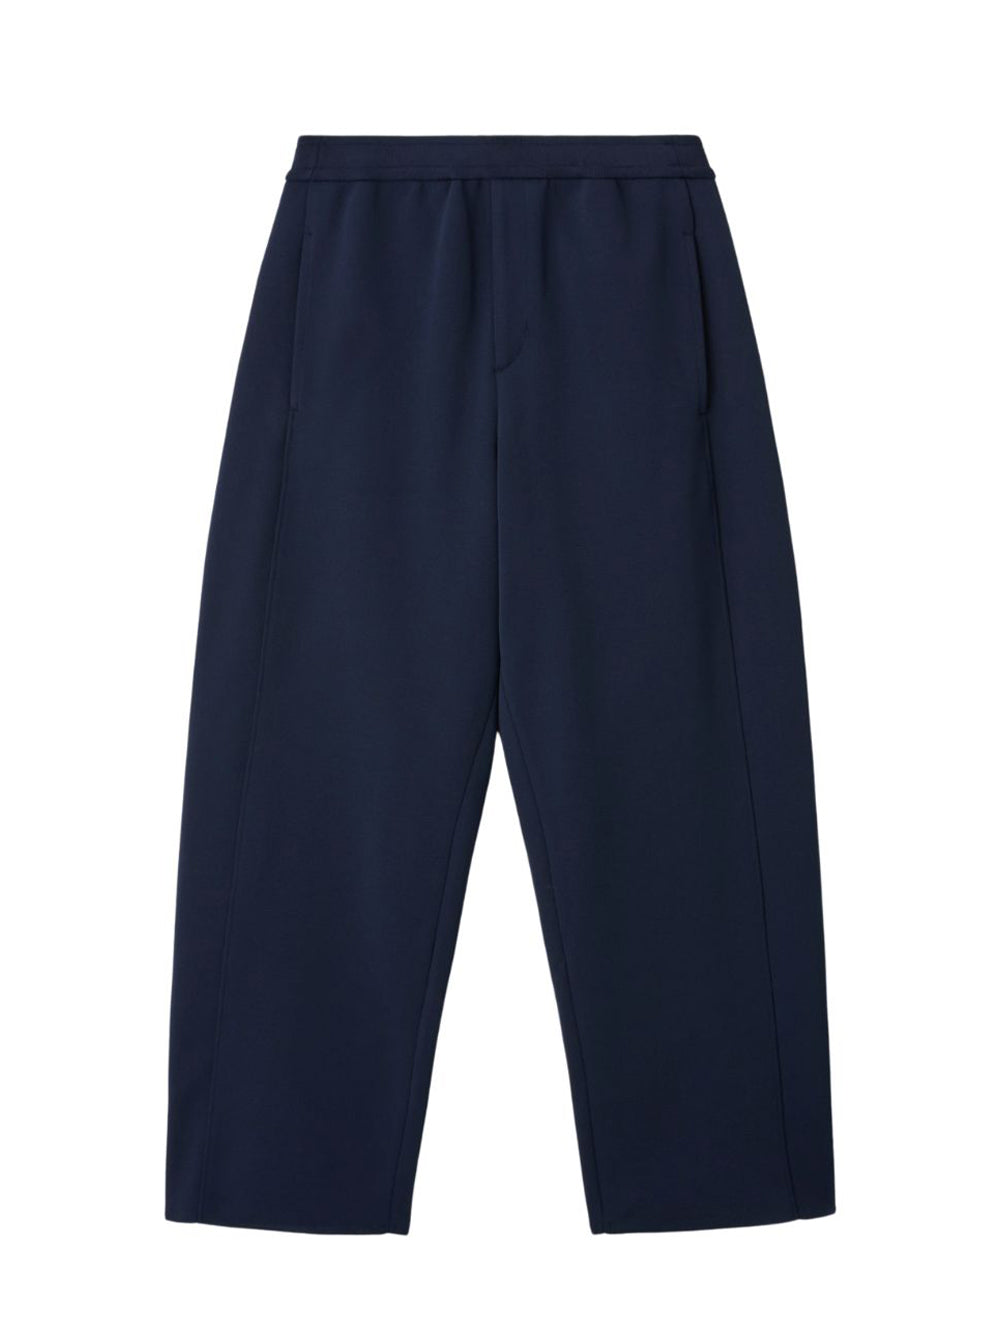 Milan Rib Curved Pants (Navy)